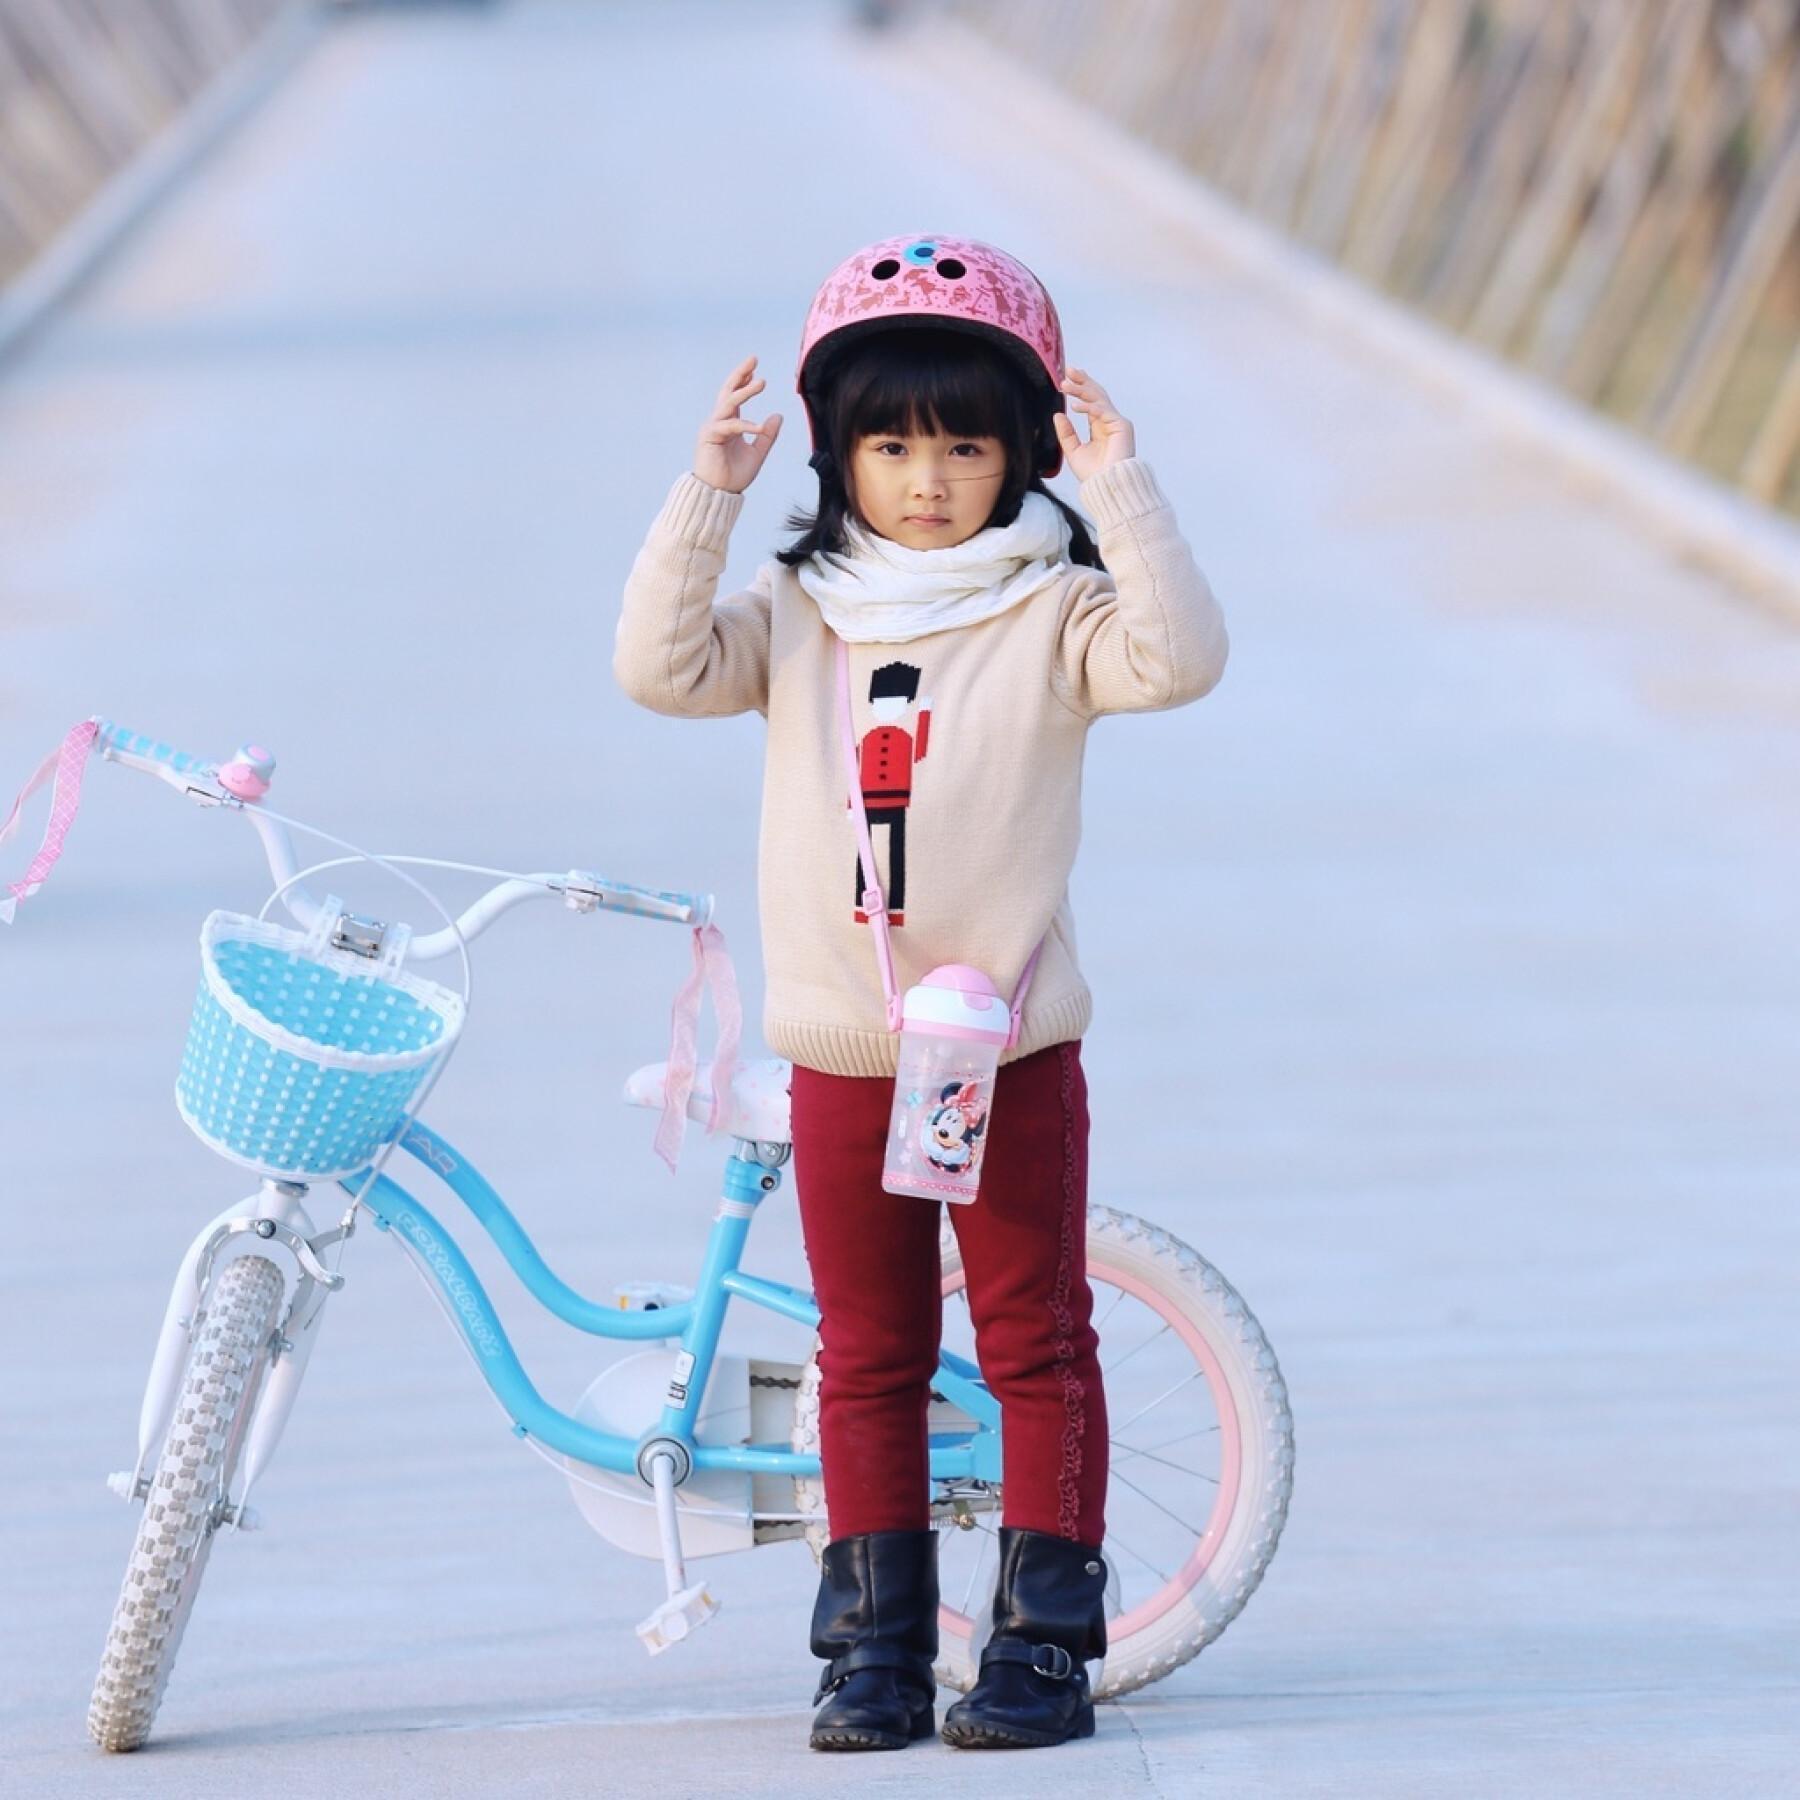 Bicicletta per bambini RoyalBaby Star 14